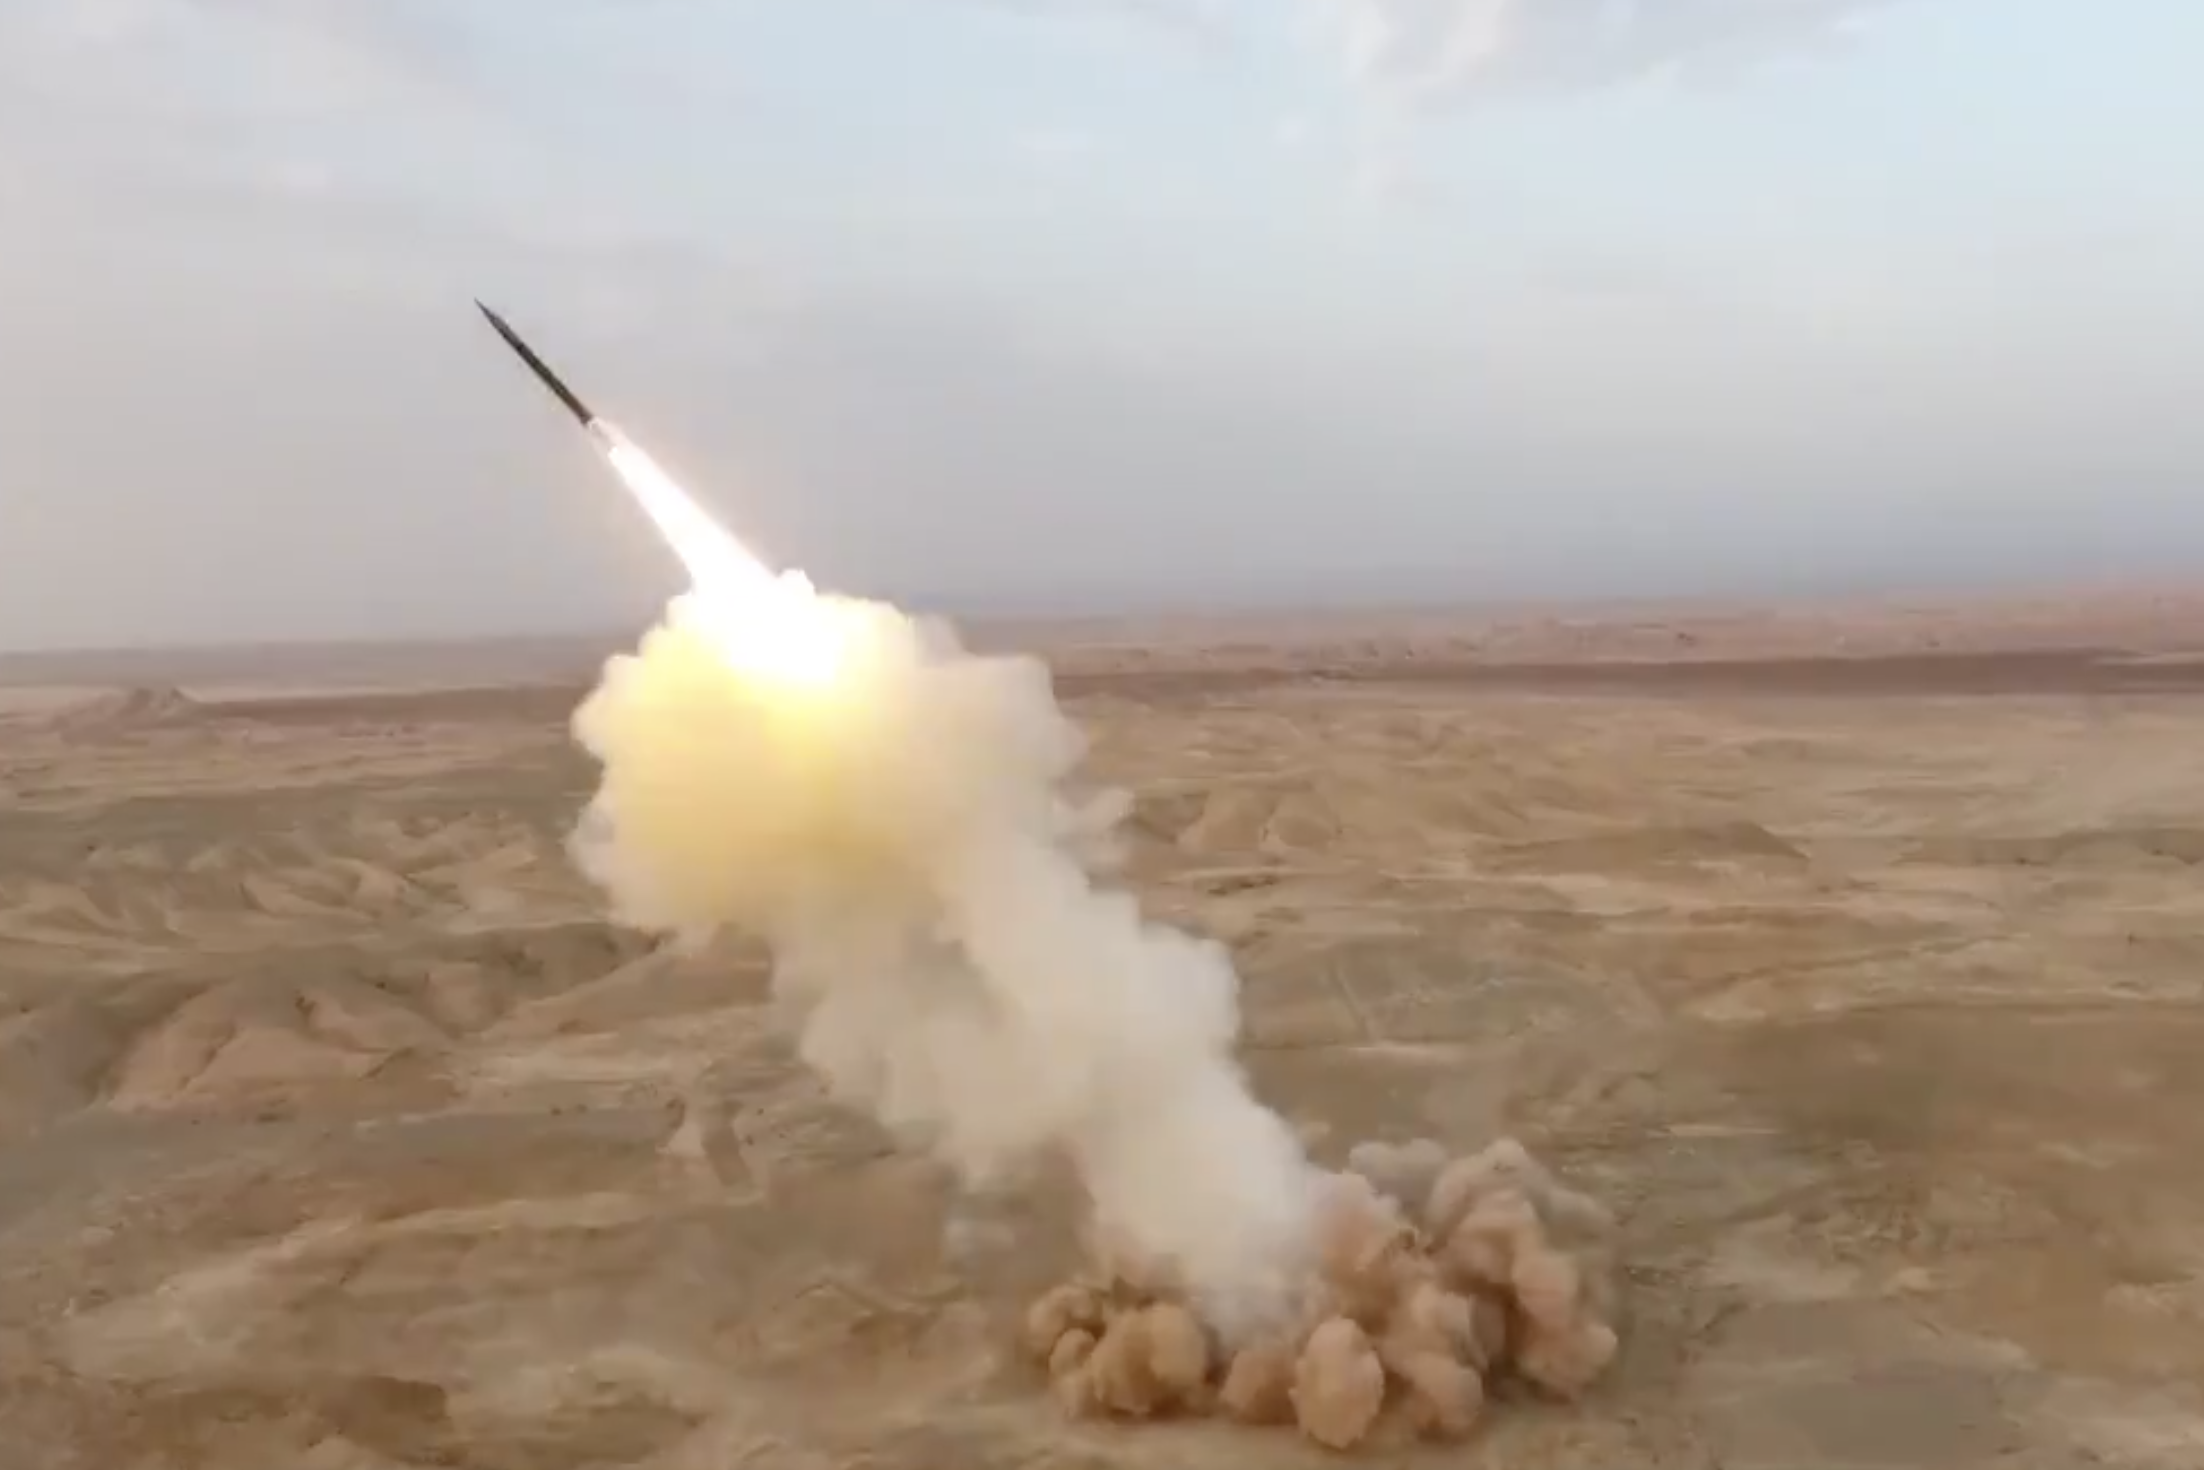 Iran’s Revolutionary Guard Corps unveiled a new underground ballistic missile launcher platform